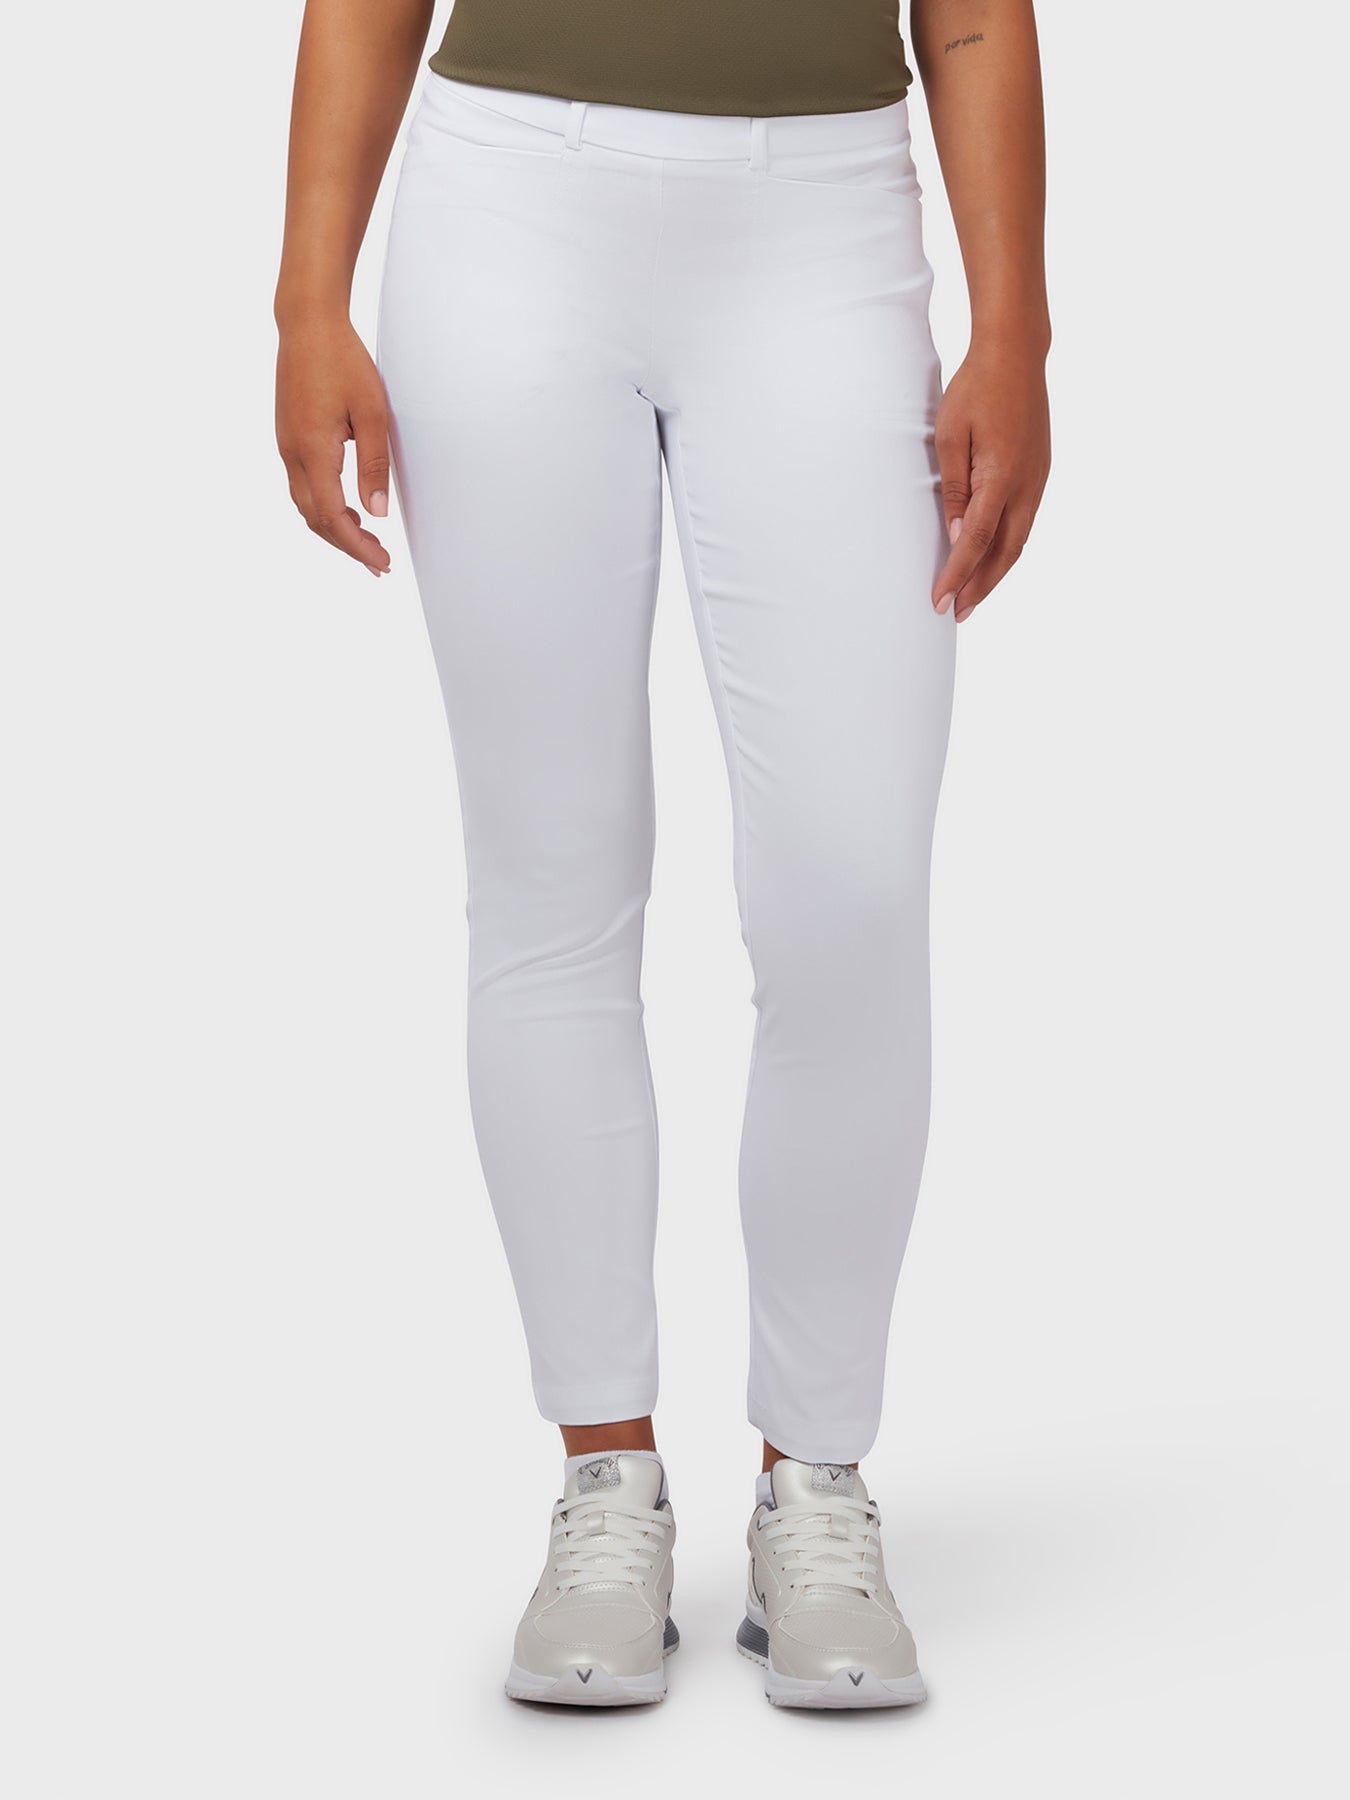 View Truesculpt Womens Trousers In Brilliant White Brilliant White XL 32 information